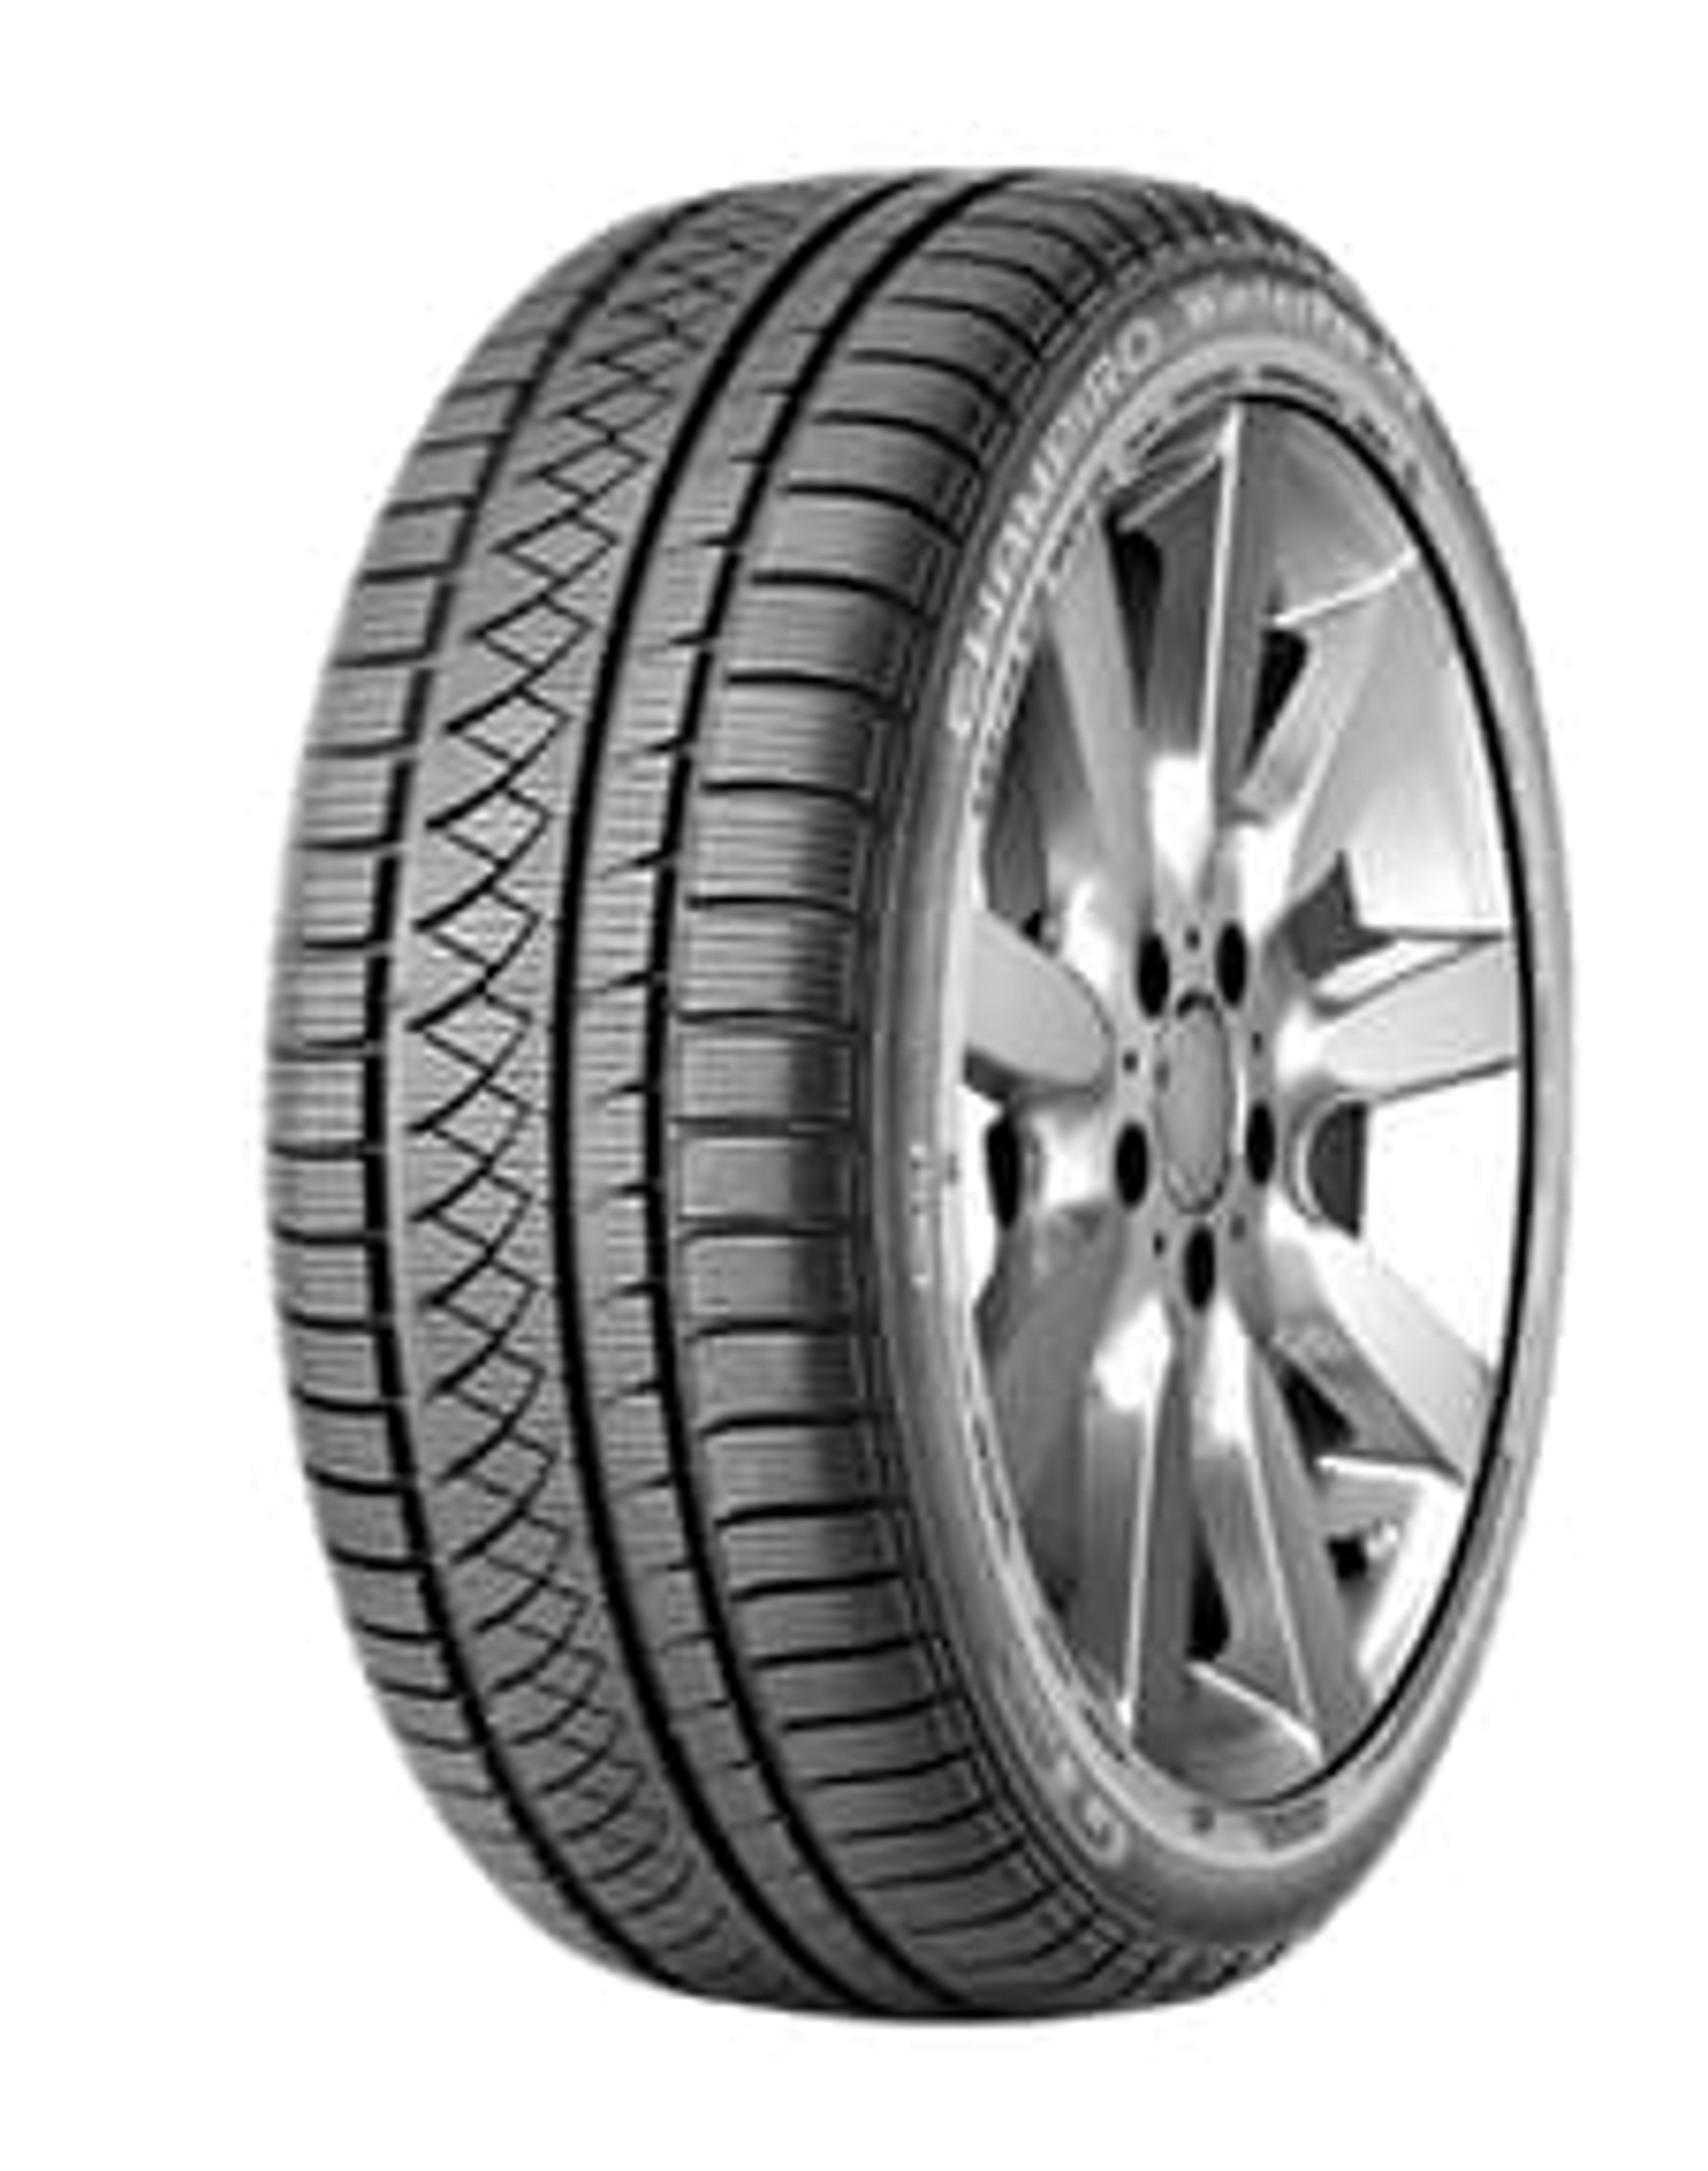 Buy GT Radial Champiro Winterpro HP Tires Online | SimpleTire